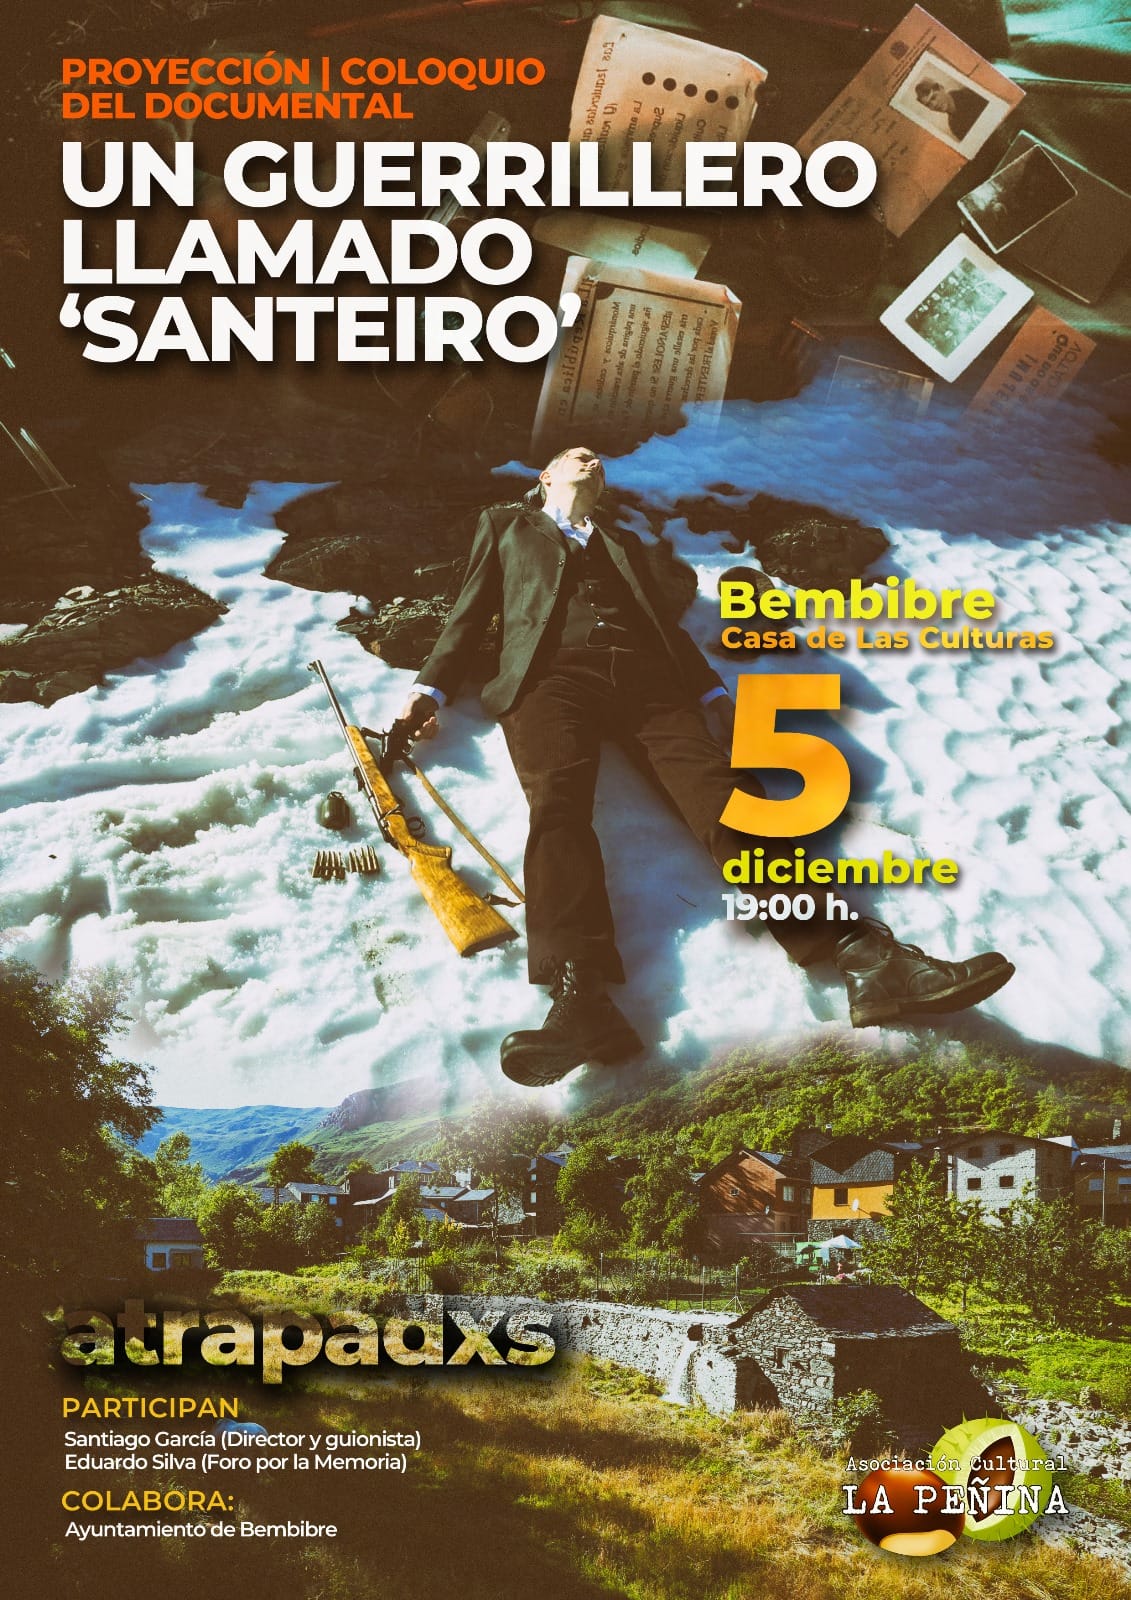 Presentación del documental "Un guerrillero llamado Santeiro" Serafín Fernández en Bembibre 2